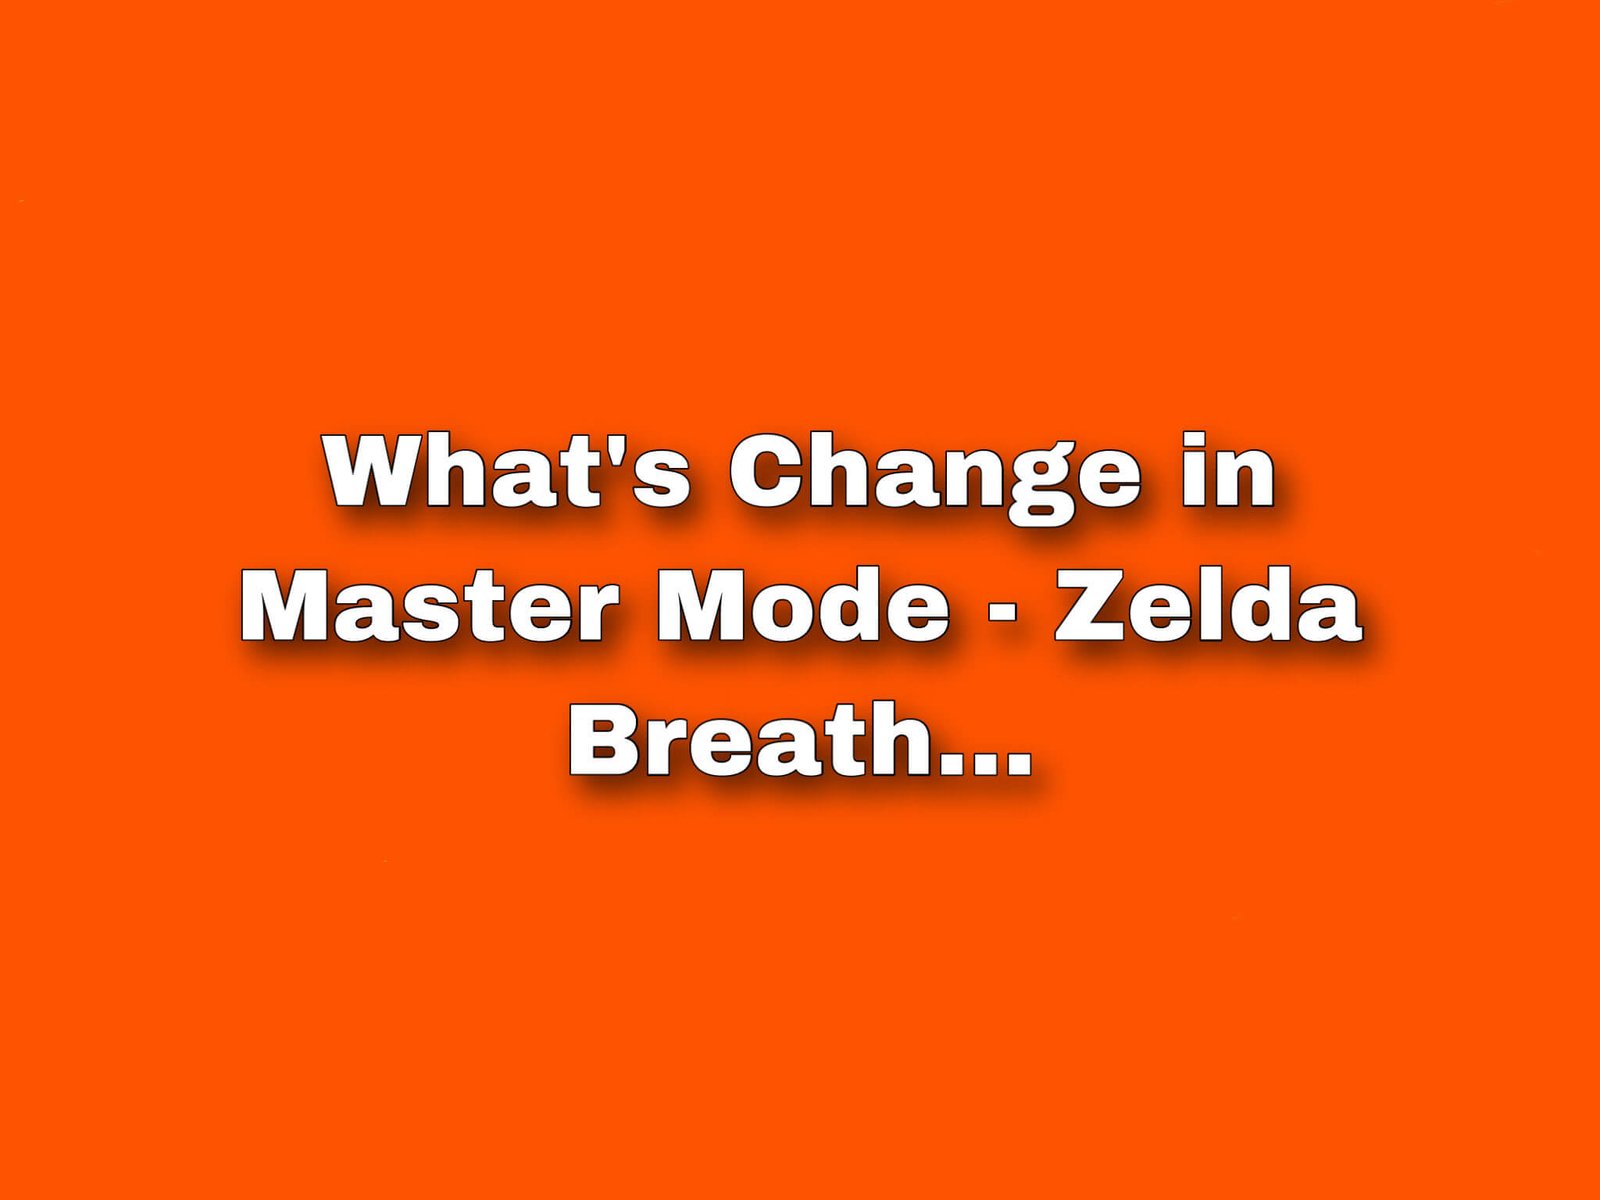 https://shyoz.com/wp-content/uploads/2021/02/Whats-Change-in-Master-Mode-Zelda-Breath..jpg